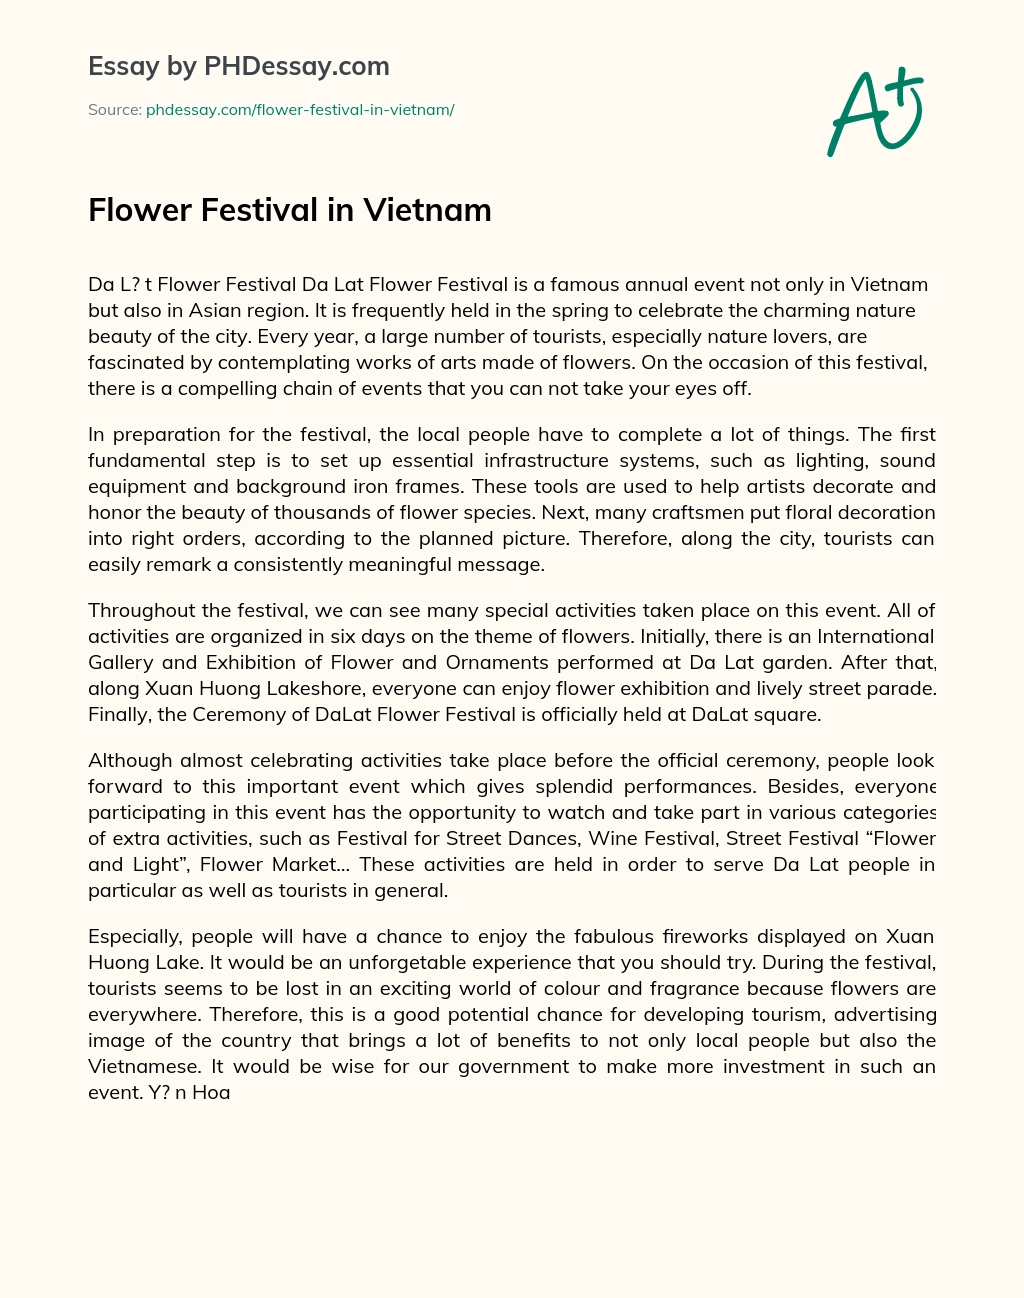 Flower Festival in Vietnam essay